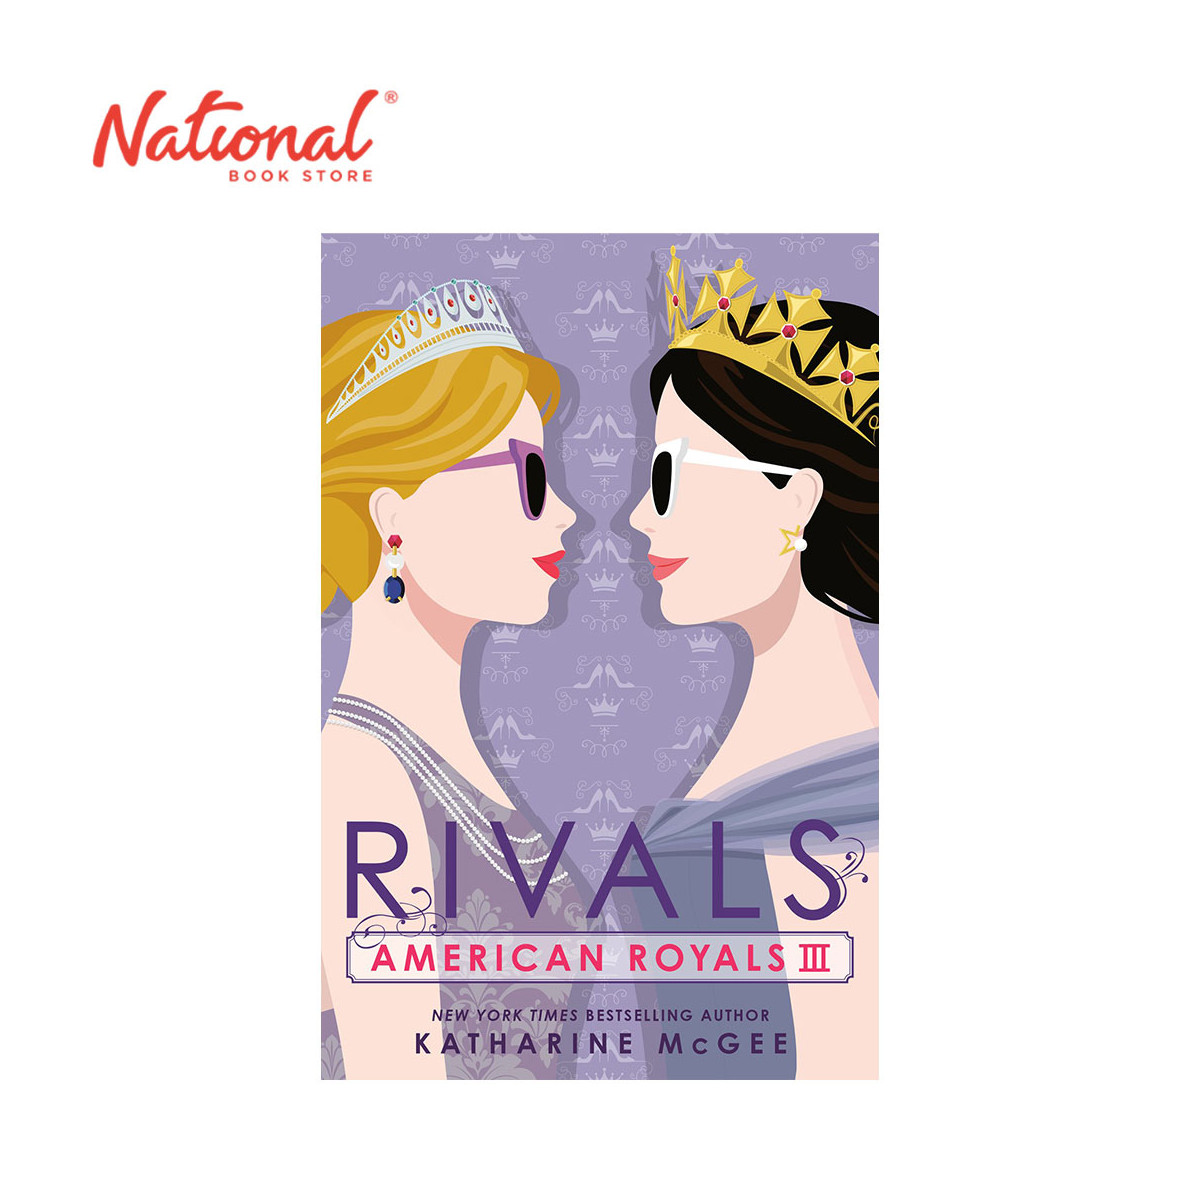 American Royals III Rivals by Katharine Mcgee - Trade Paperback - Teens Fiction - YA Books